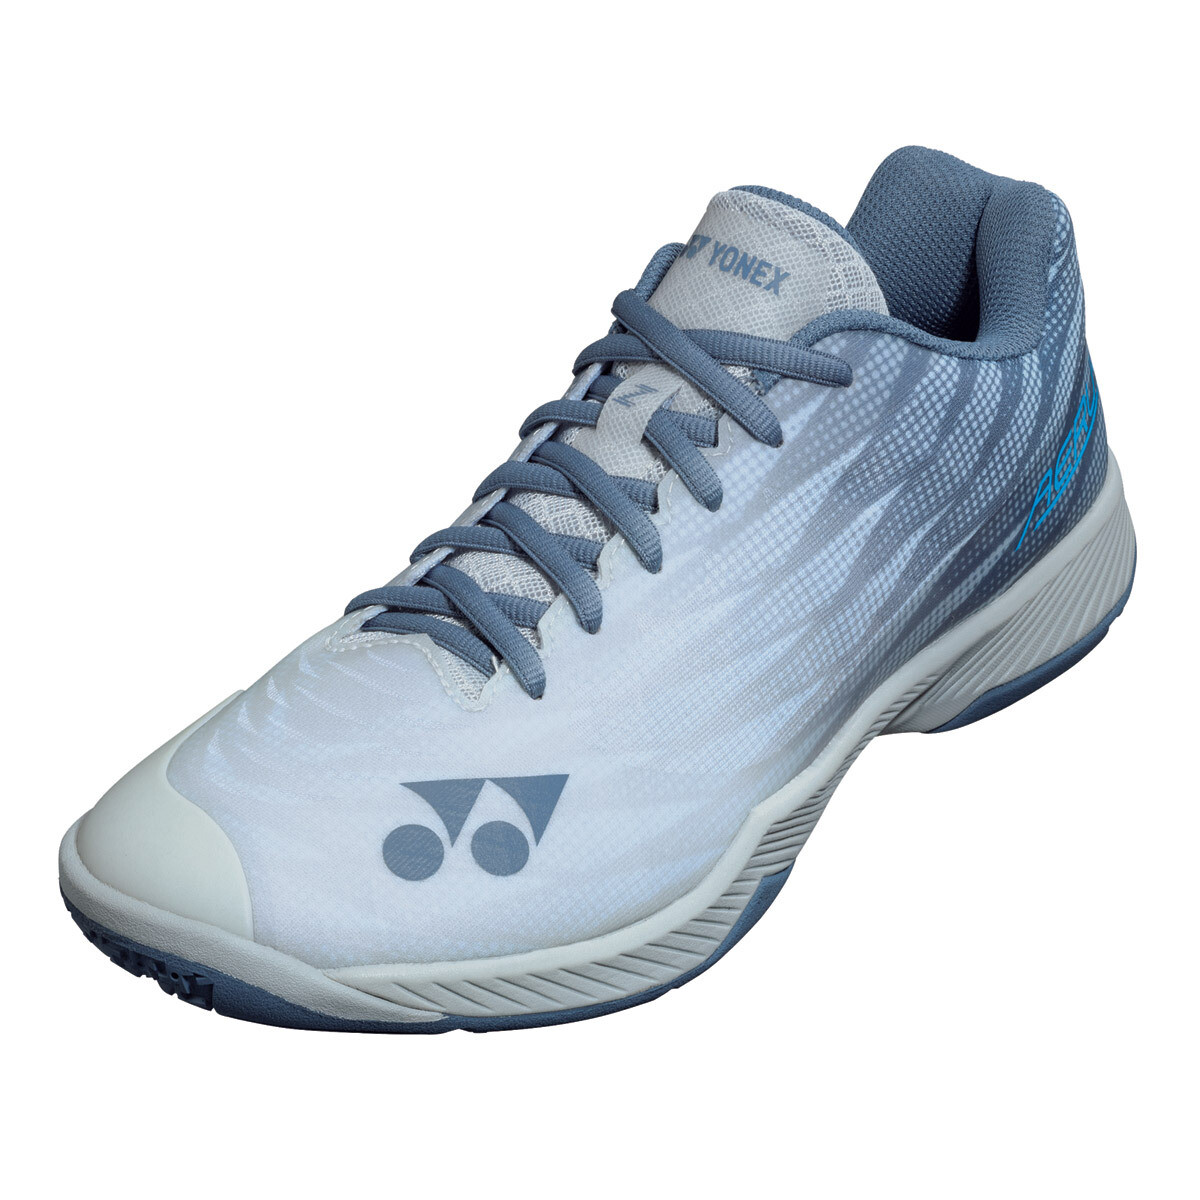 Yonex Power Cushion Aerus Z2 Men's Badminton Shoes - Blue/Grey